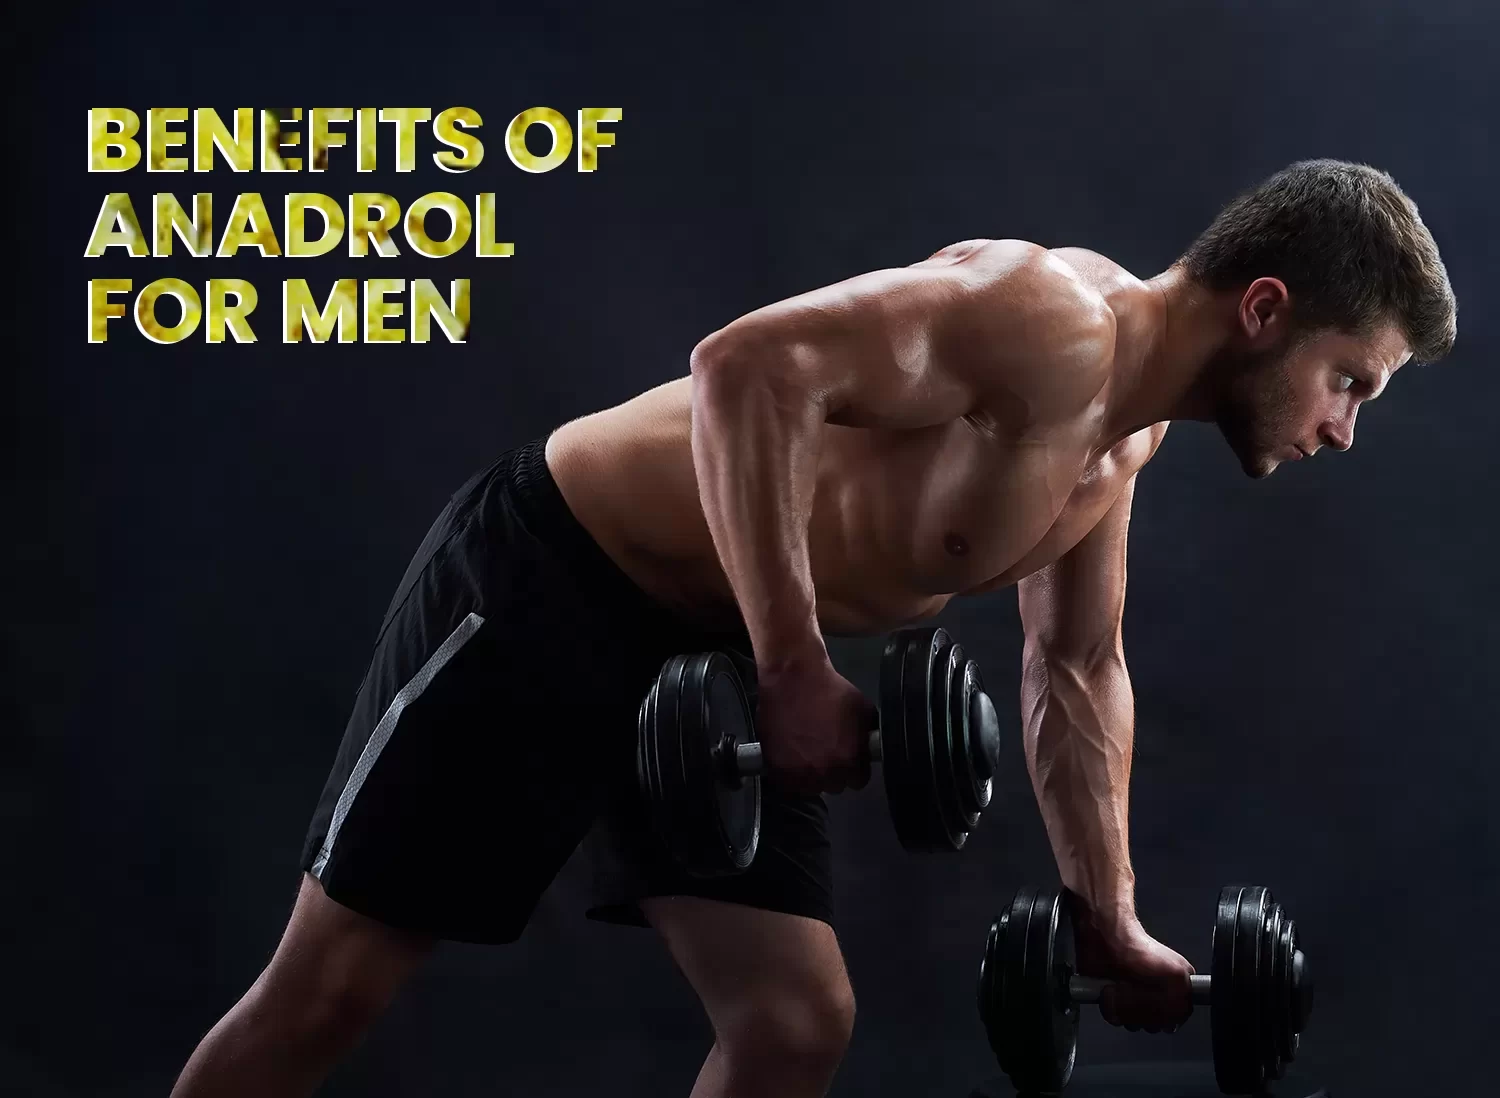 Anadrol benefits for men